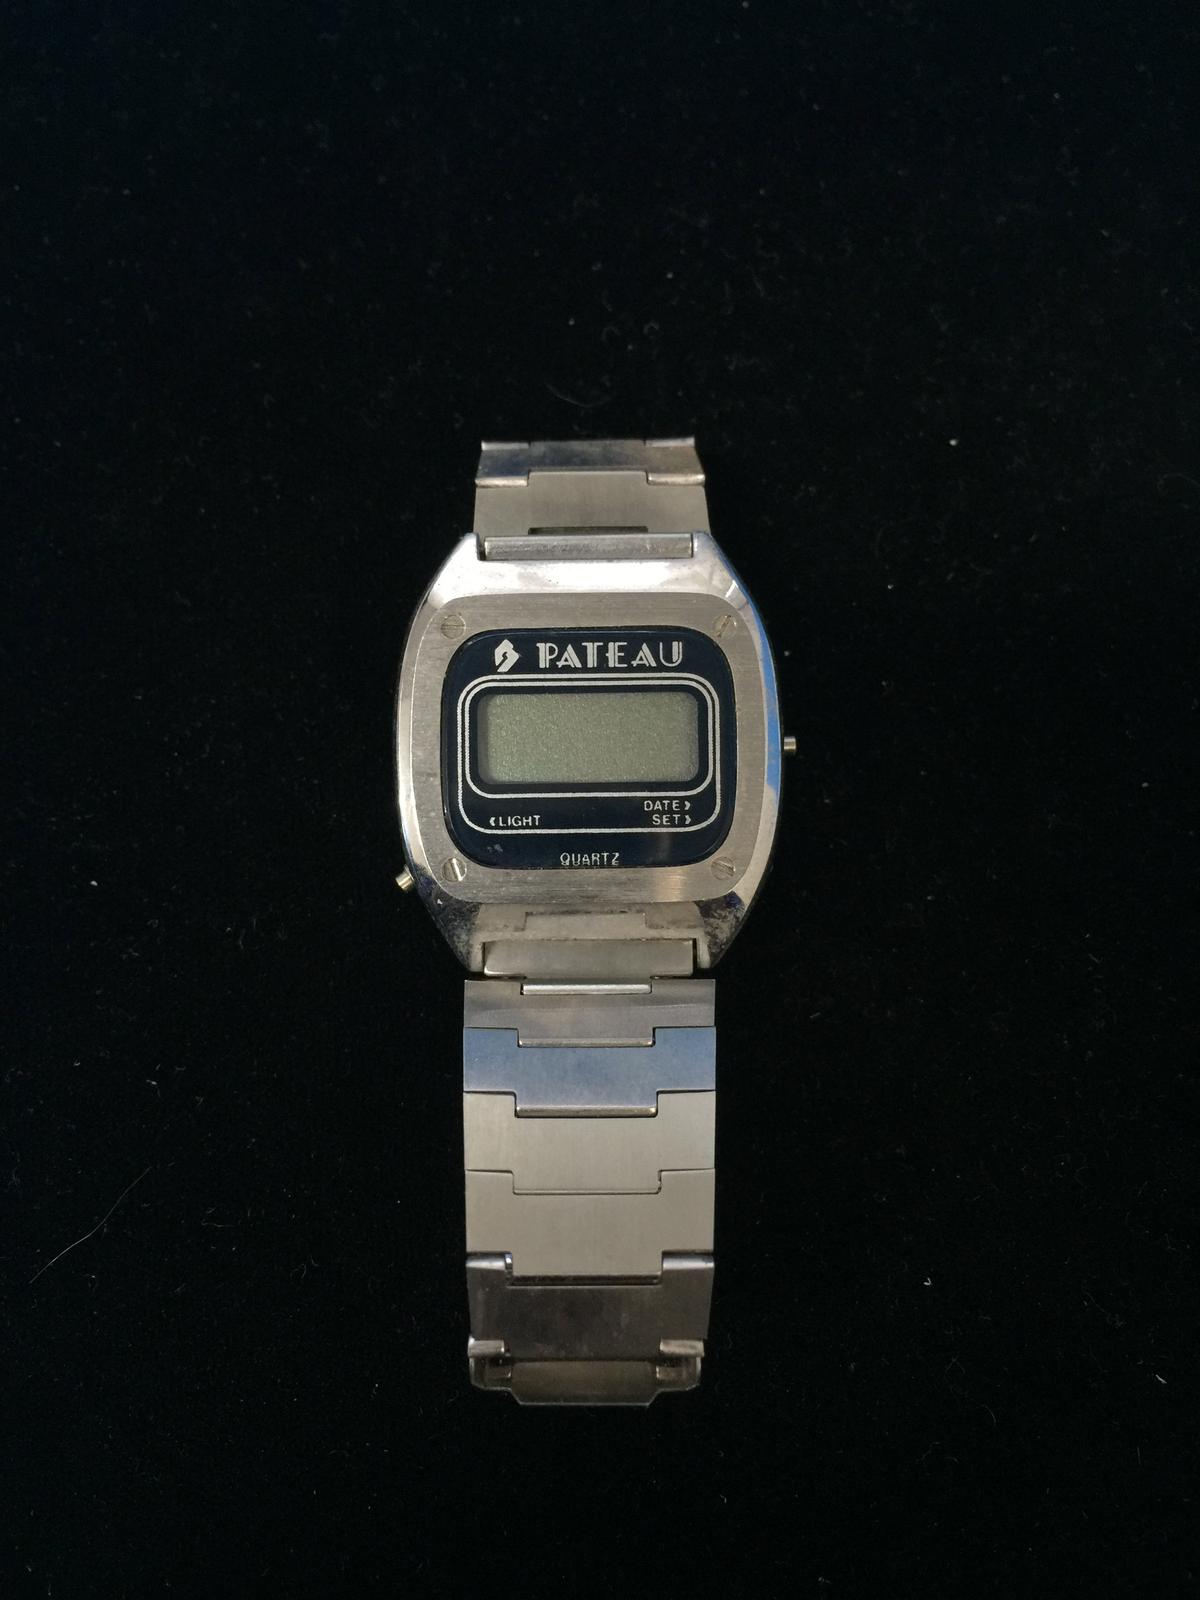 Vintage Pateau Silver Tone Digital Watch